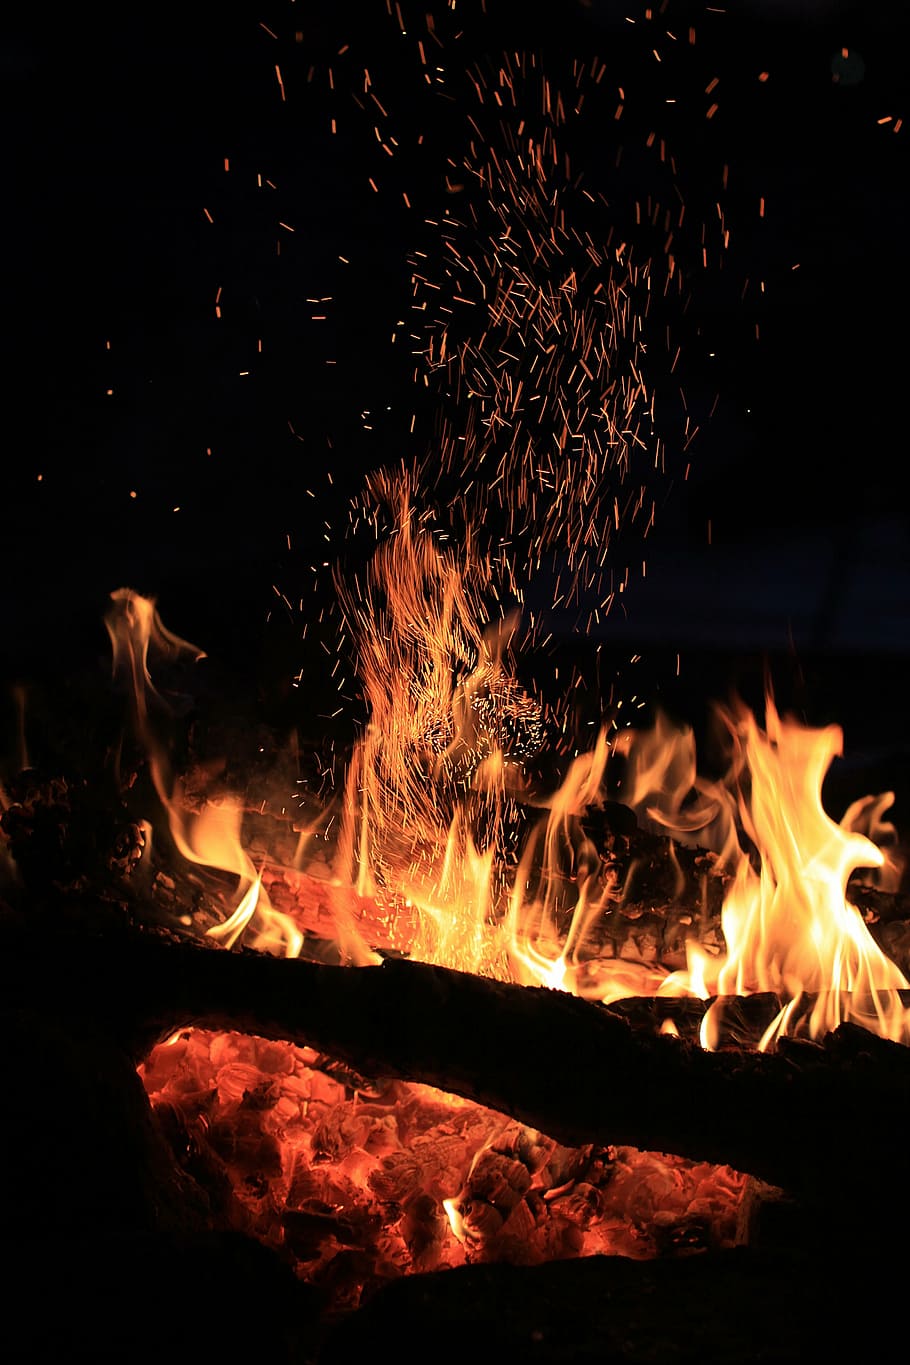 fire, bonfire, night, burning, heat - temperature, fire - natural phenomenon, flame, motion, log, glowing